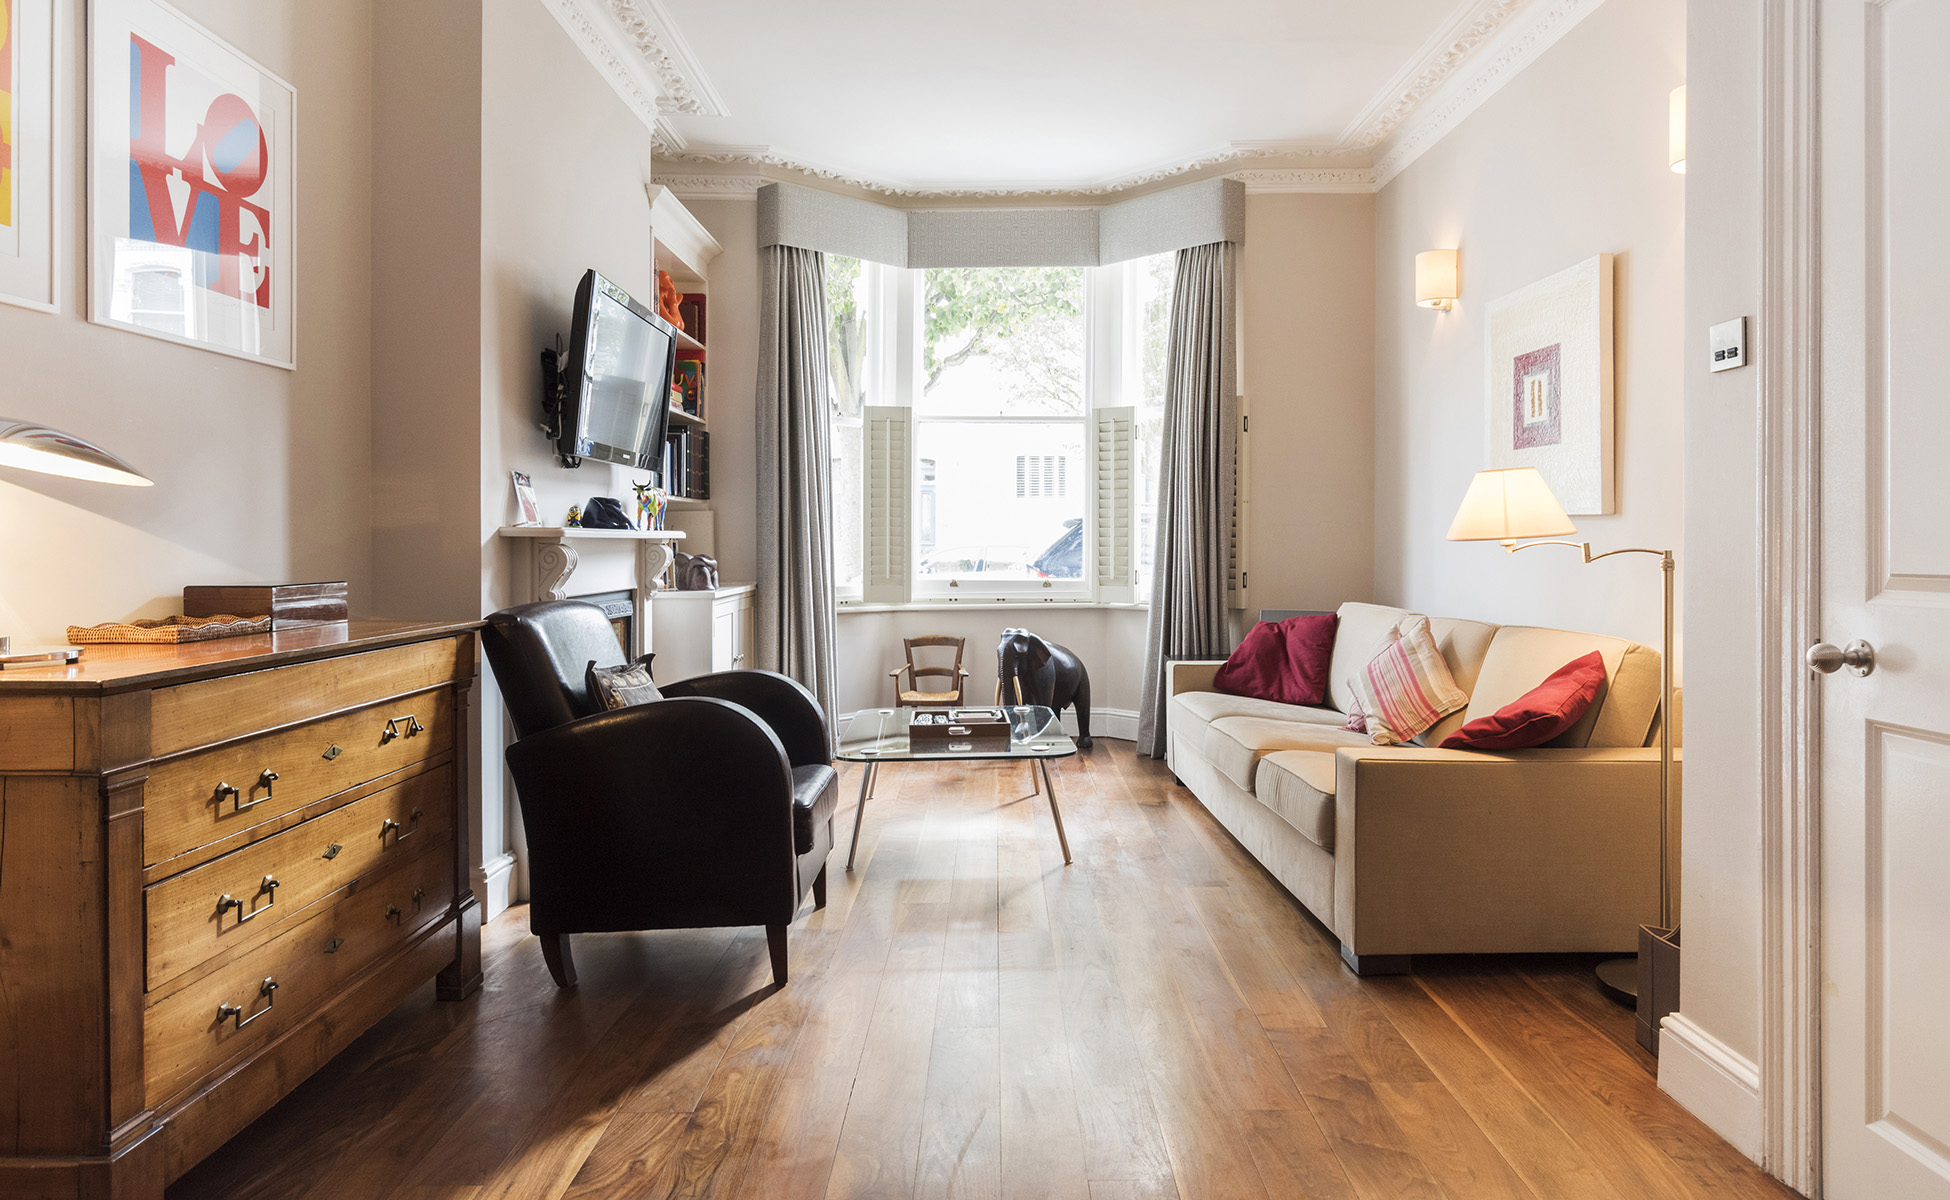 Lovelydays luxury service apartment rental - London - Fulham - Gironde road - Lovelysuite - 4 bedrooms - 2 bathrooms - Luxury living room - dbf091df8481 - Lovelydays